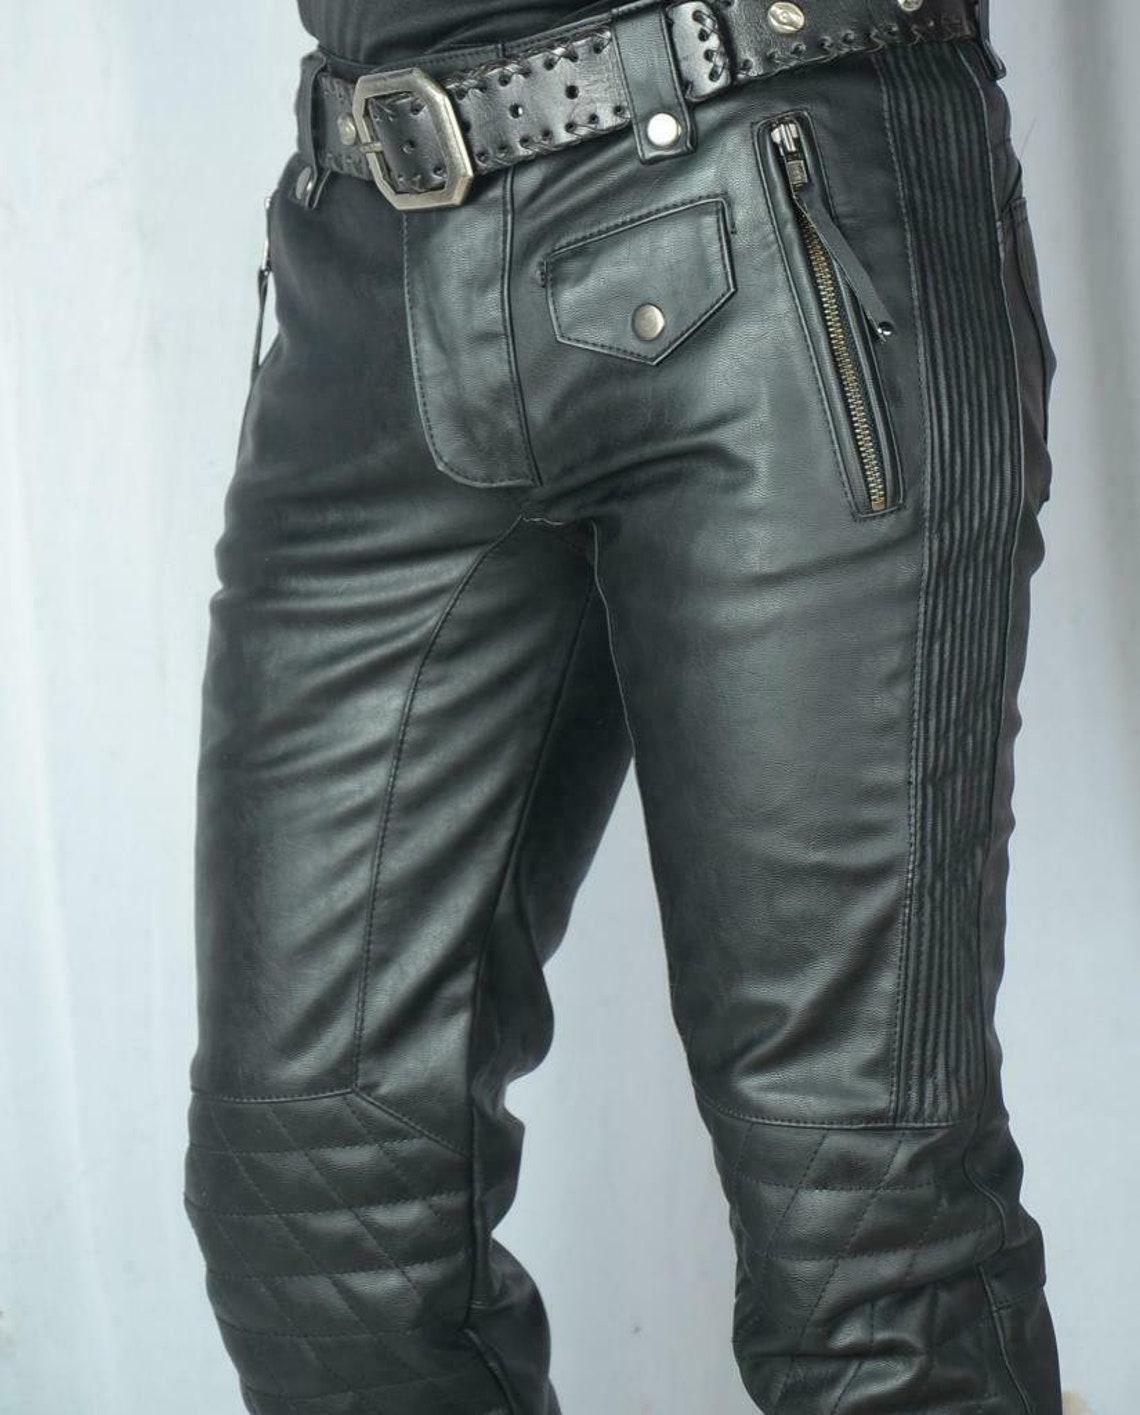 Leather Jeans Leder Pant With Side Stretch Panel Nice Knee - Etsy UK